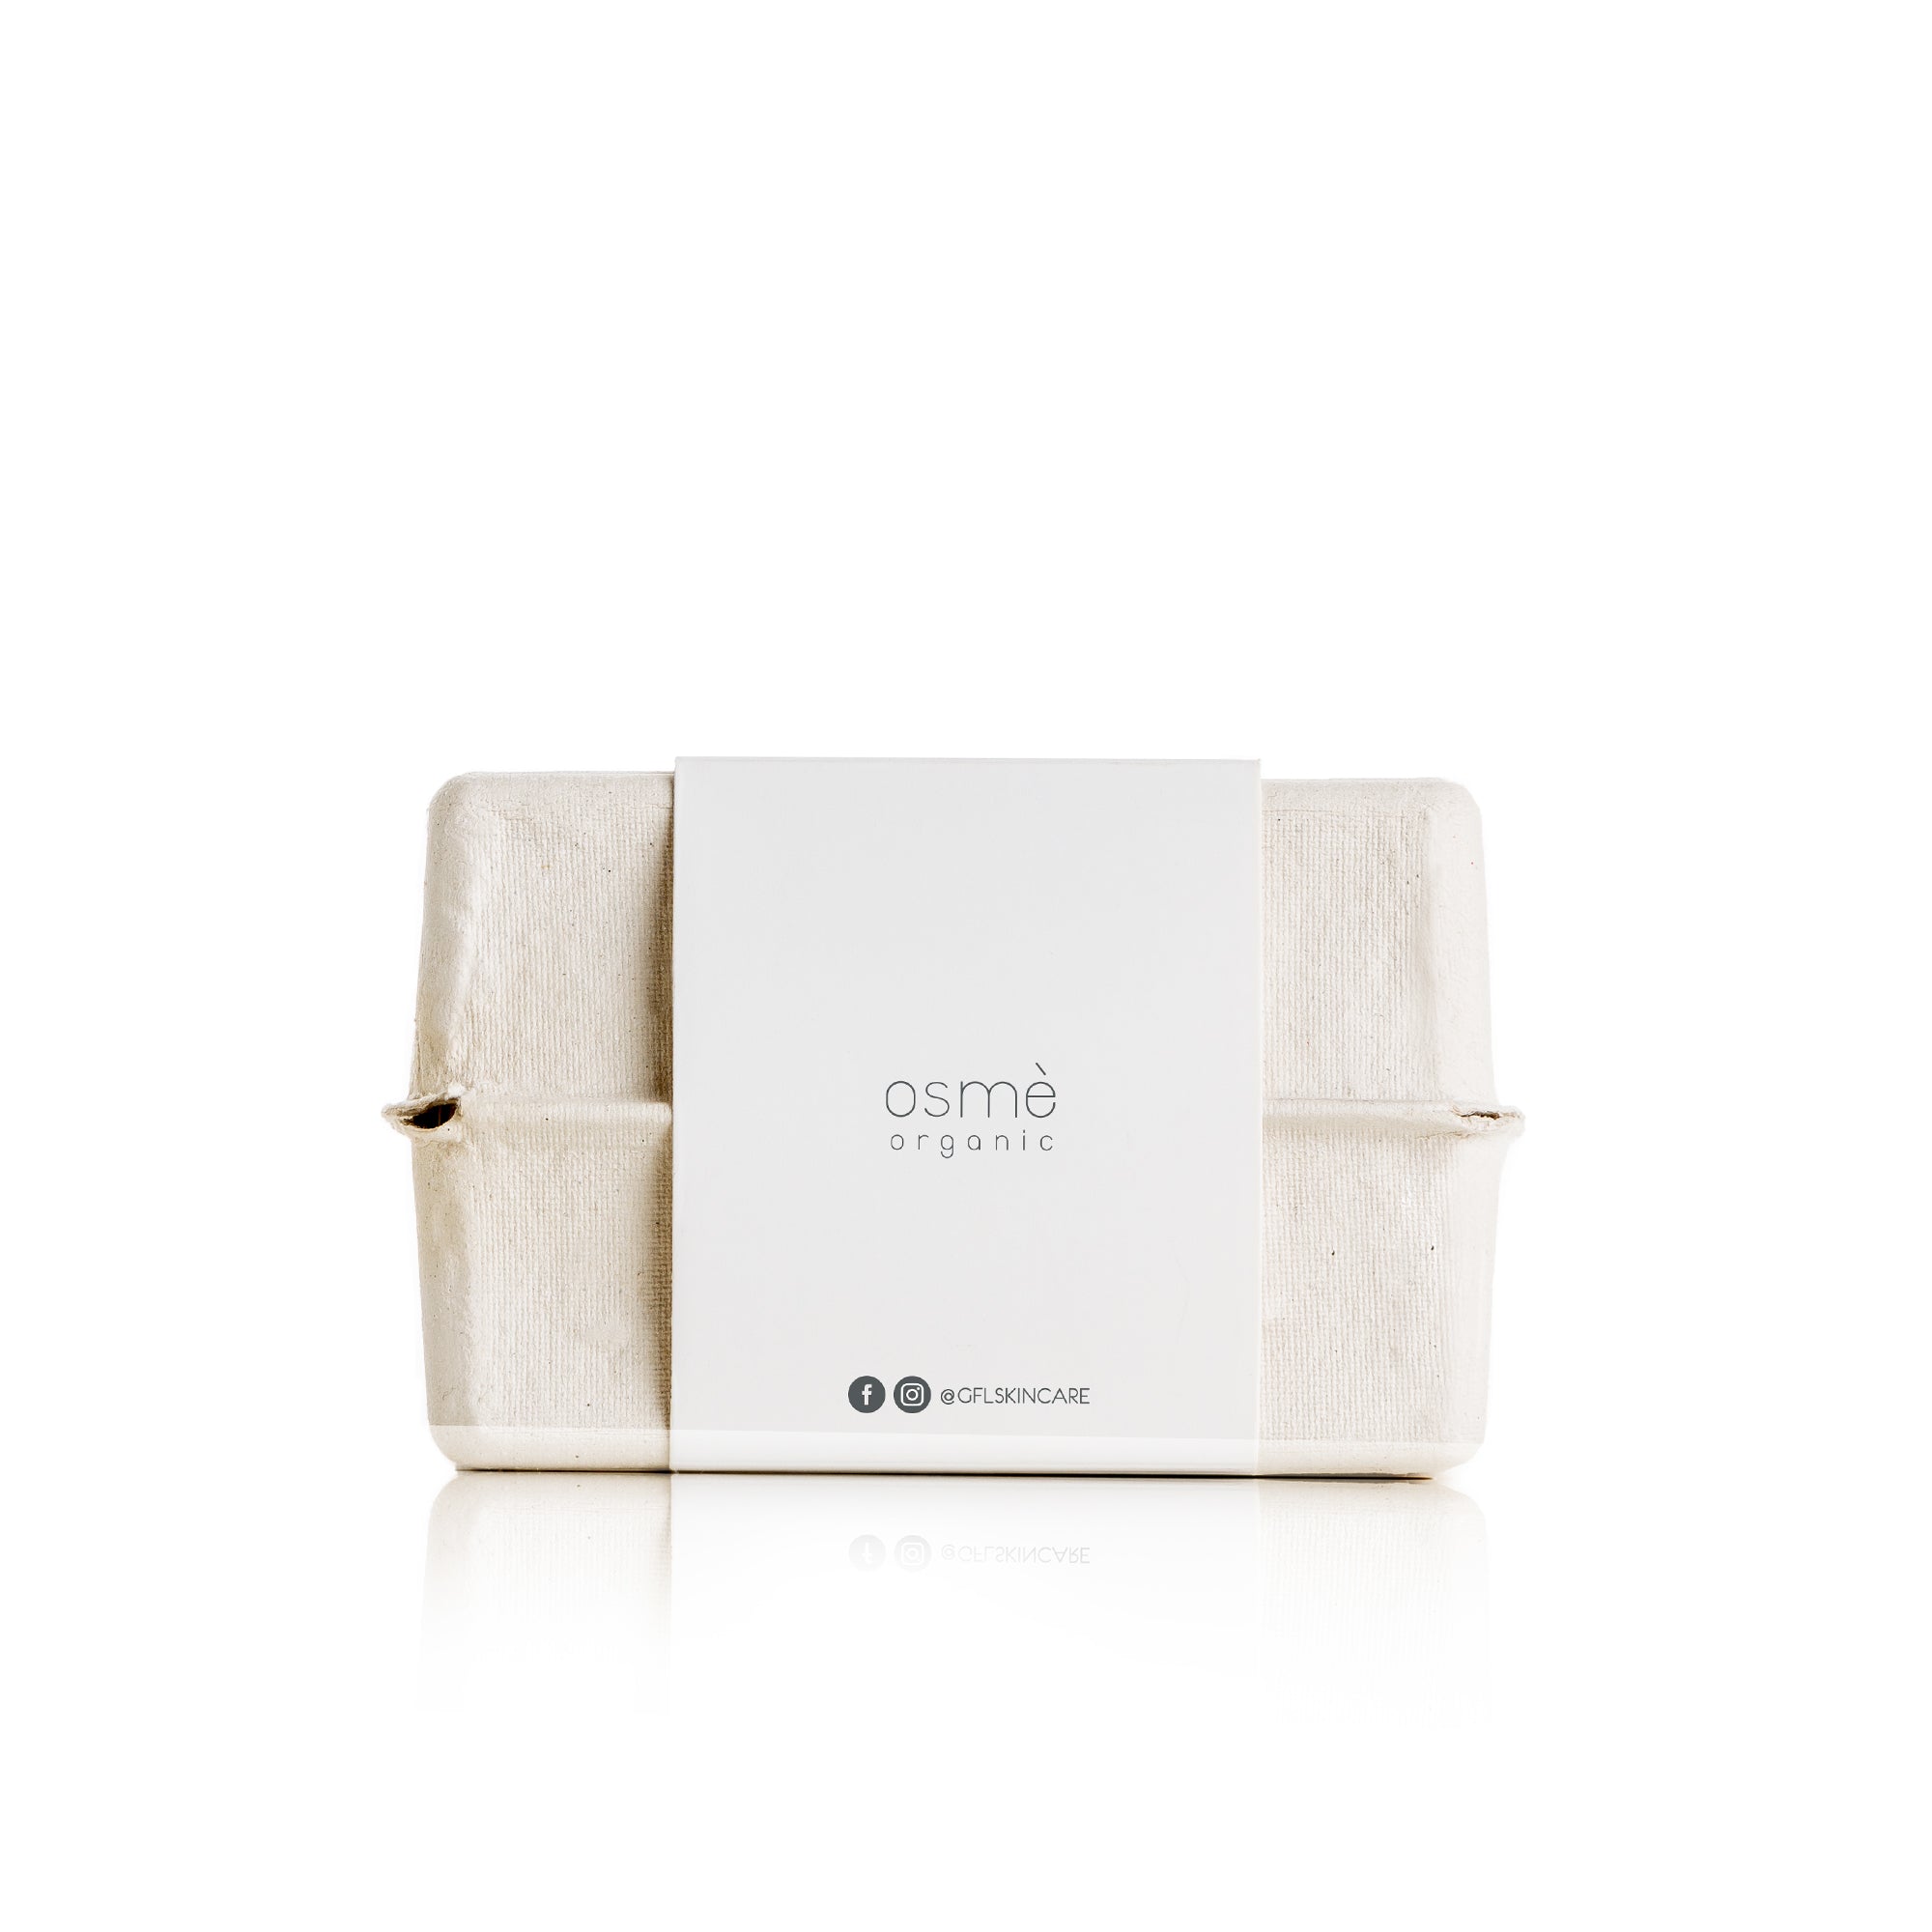 Osmè "Eggbox" Bath & Body Care Travel Set Organic Certified